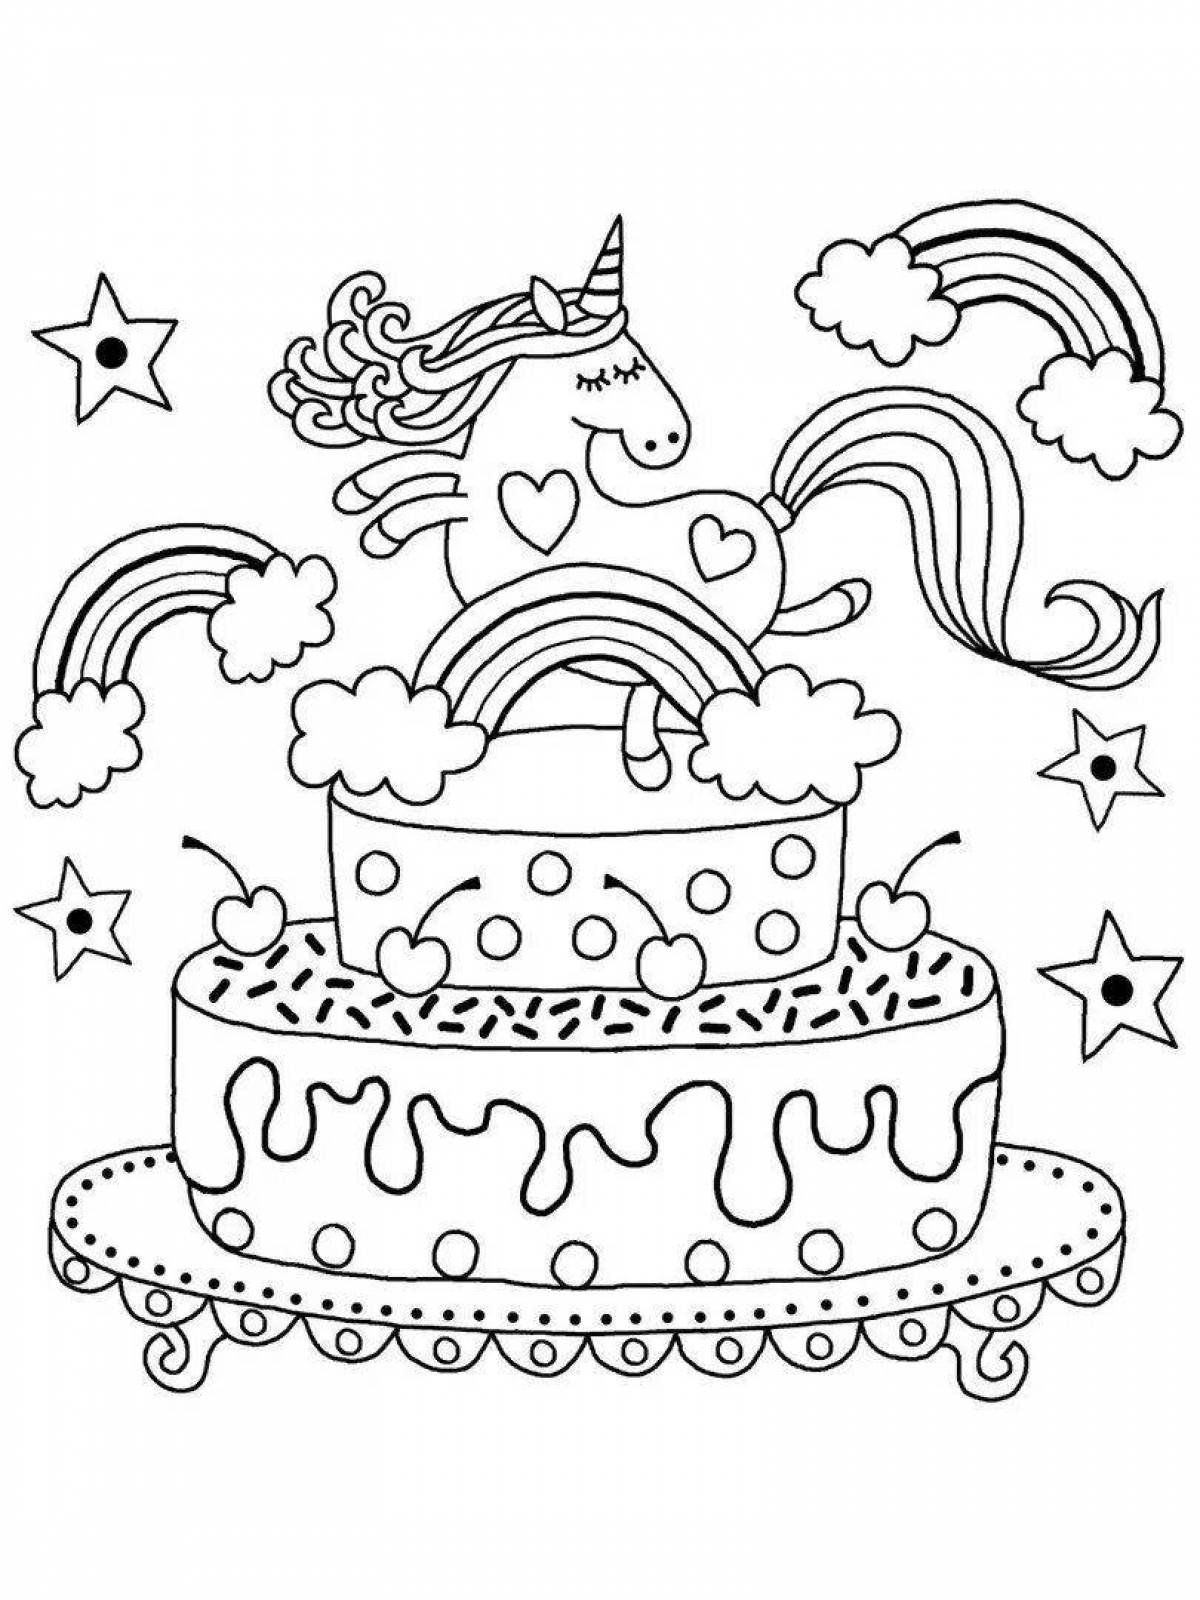 Gorgeous unicorn cake coloring book